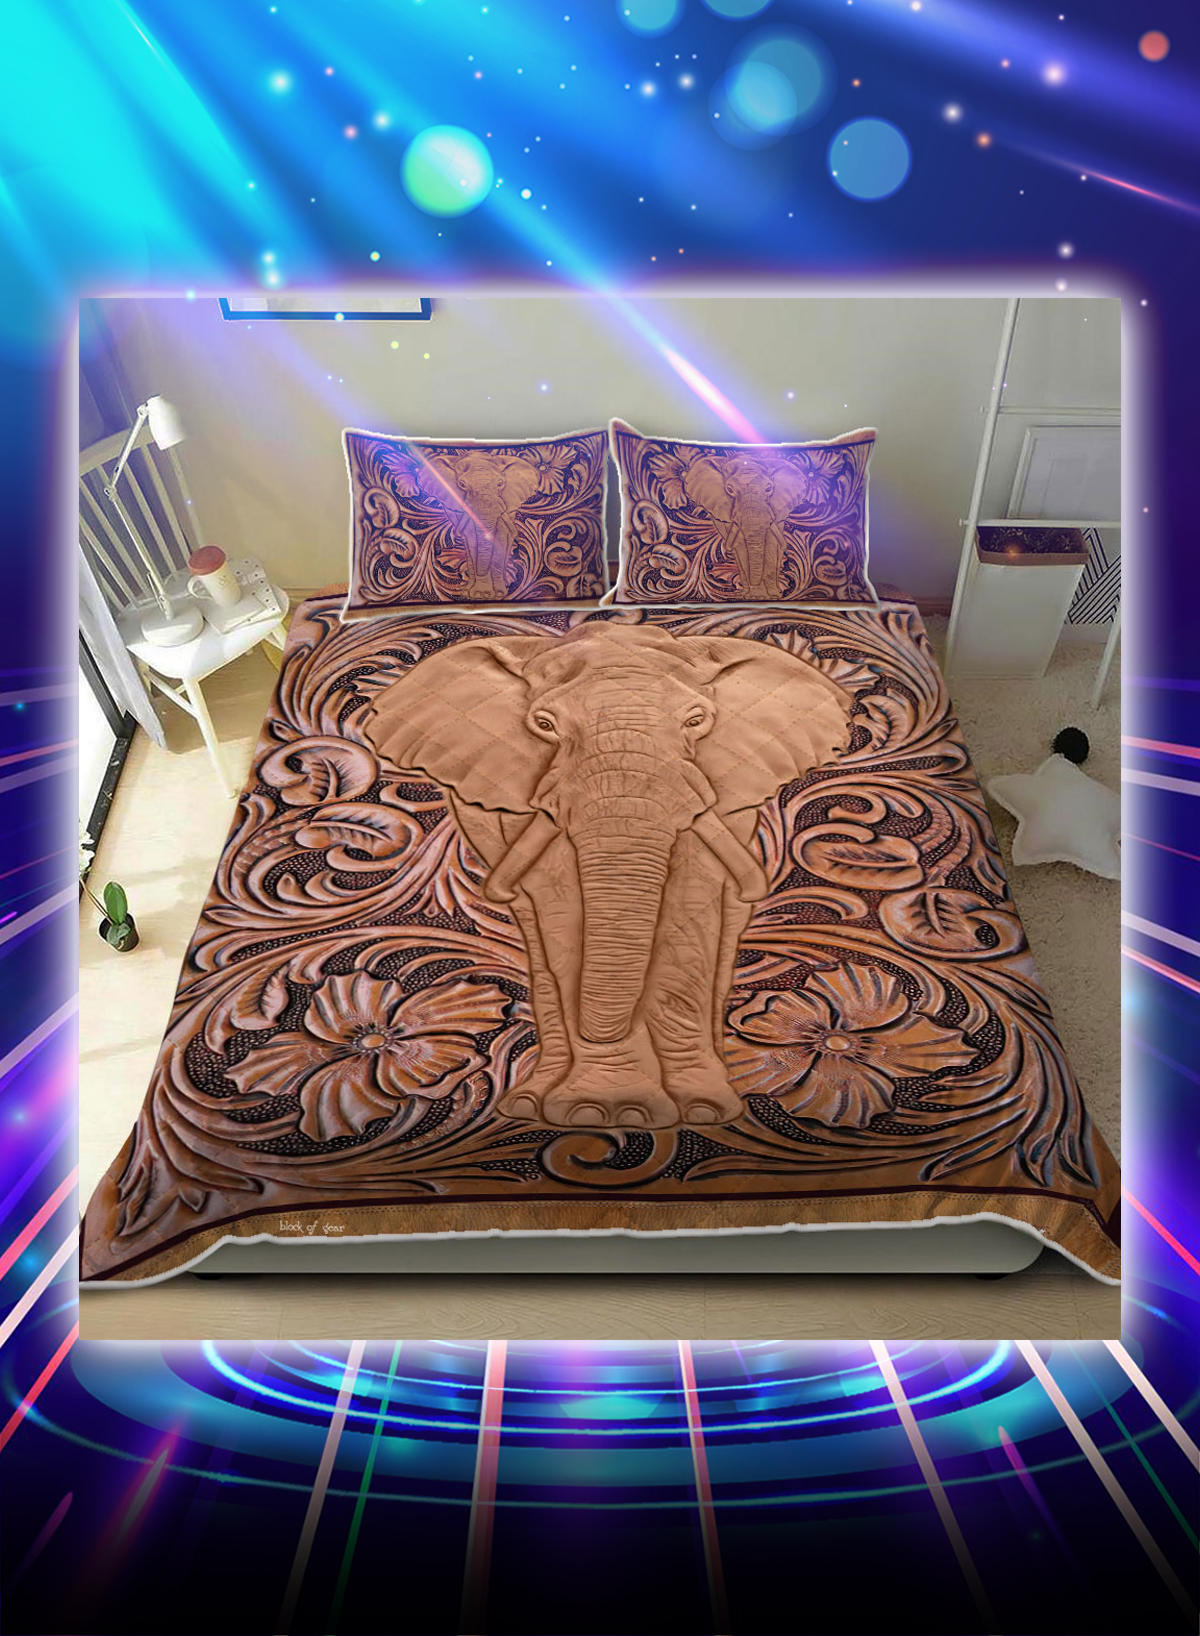 Elephant wood sculpture bed set